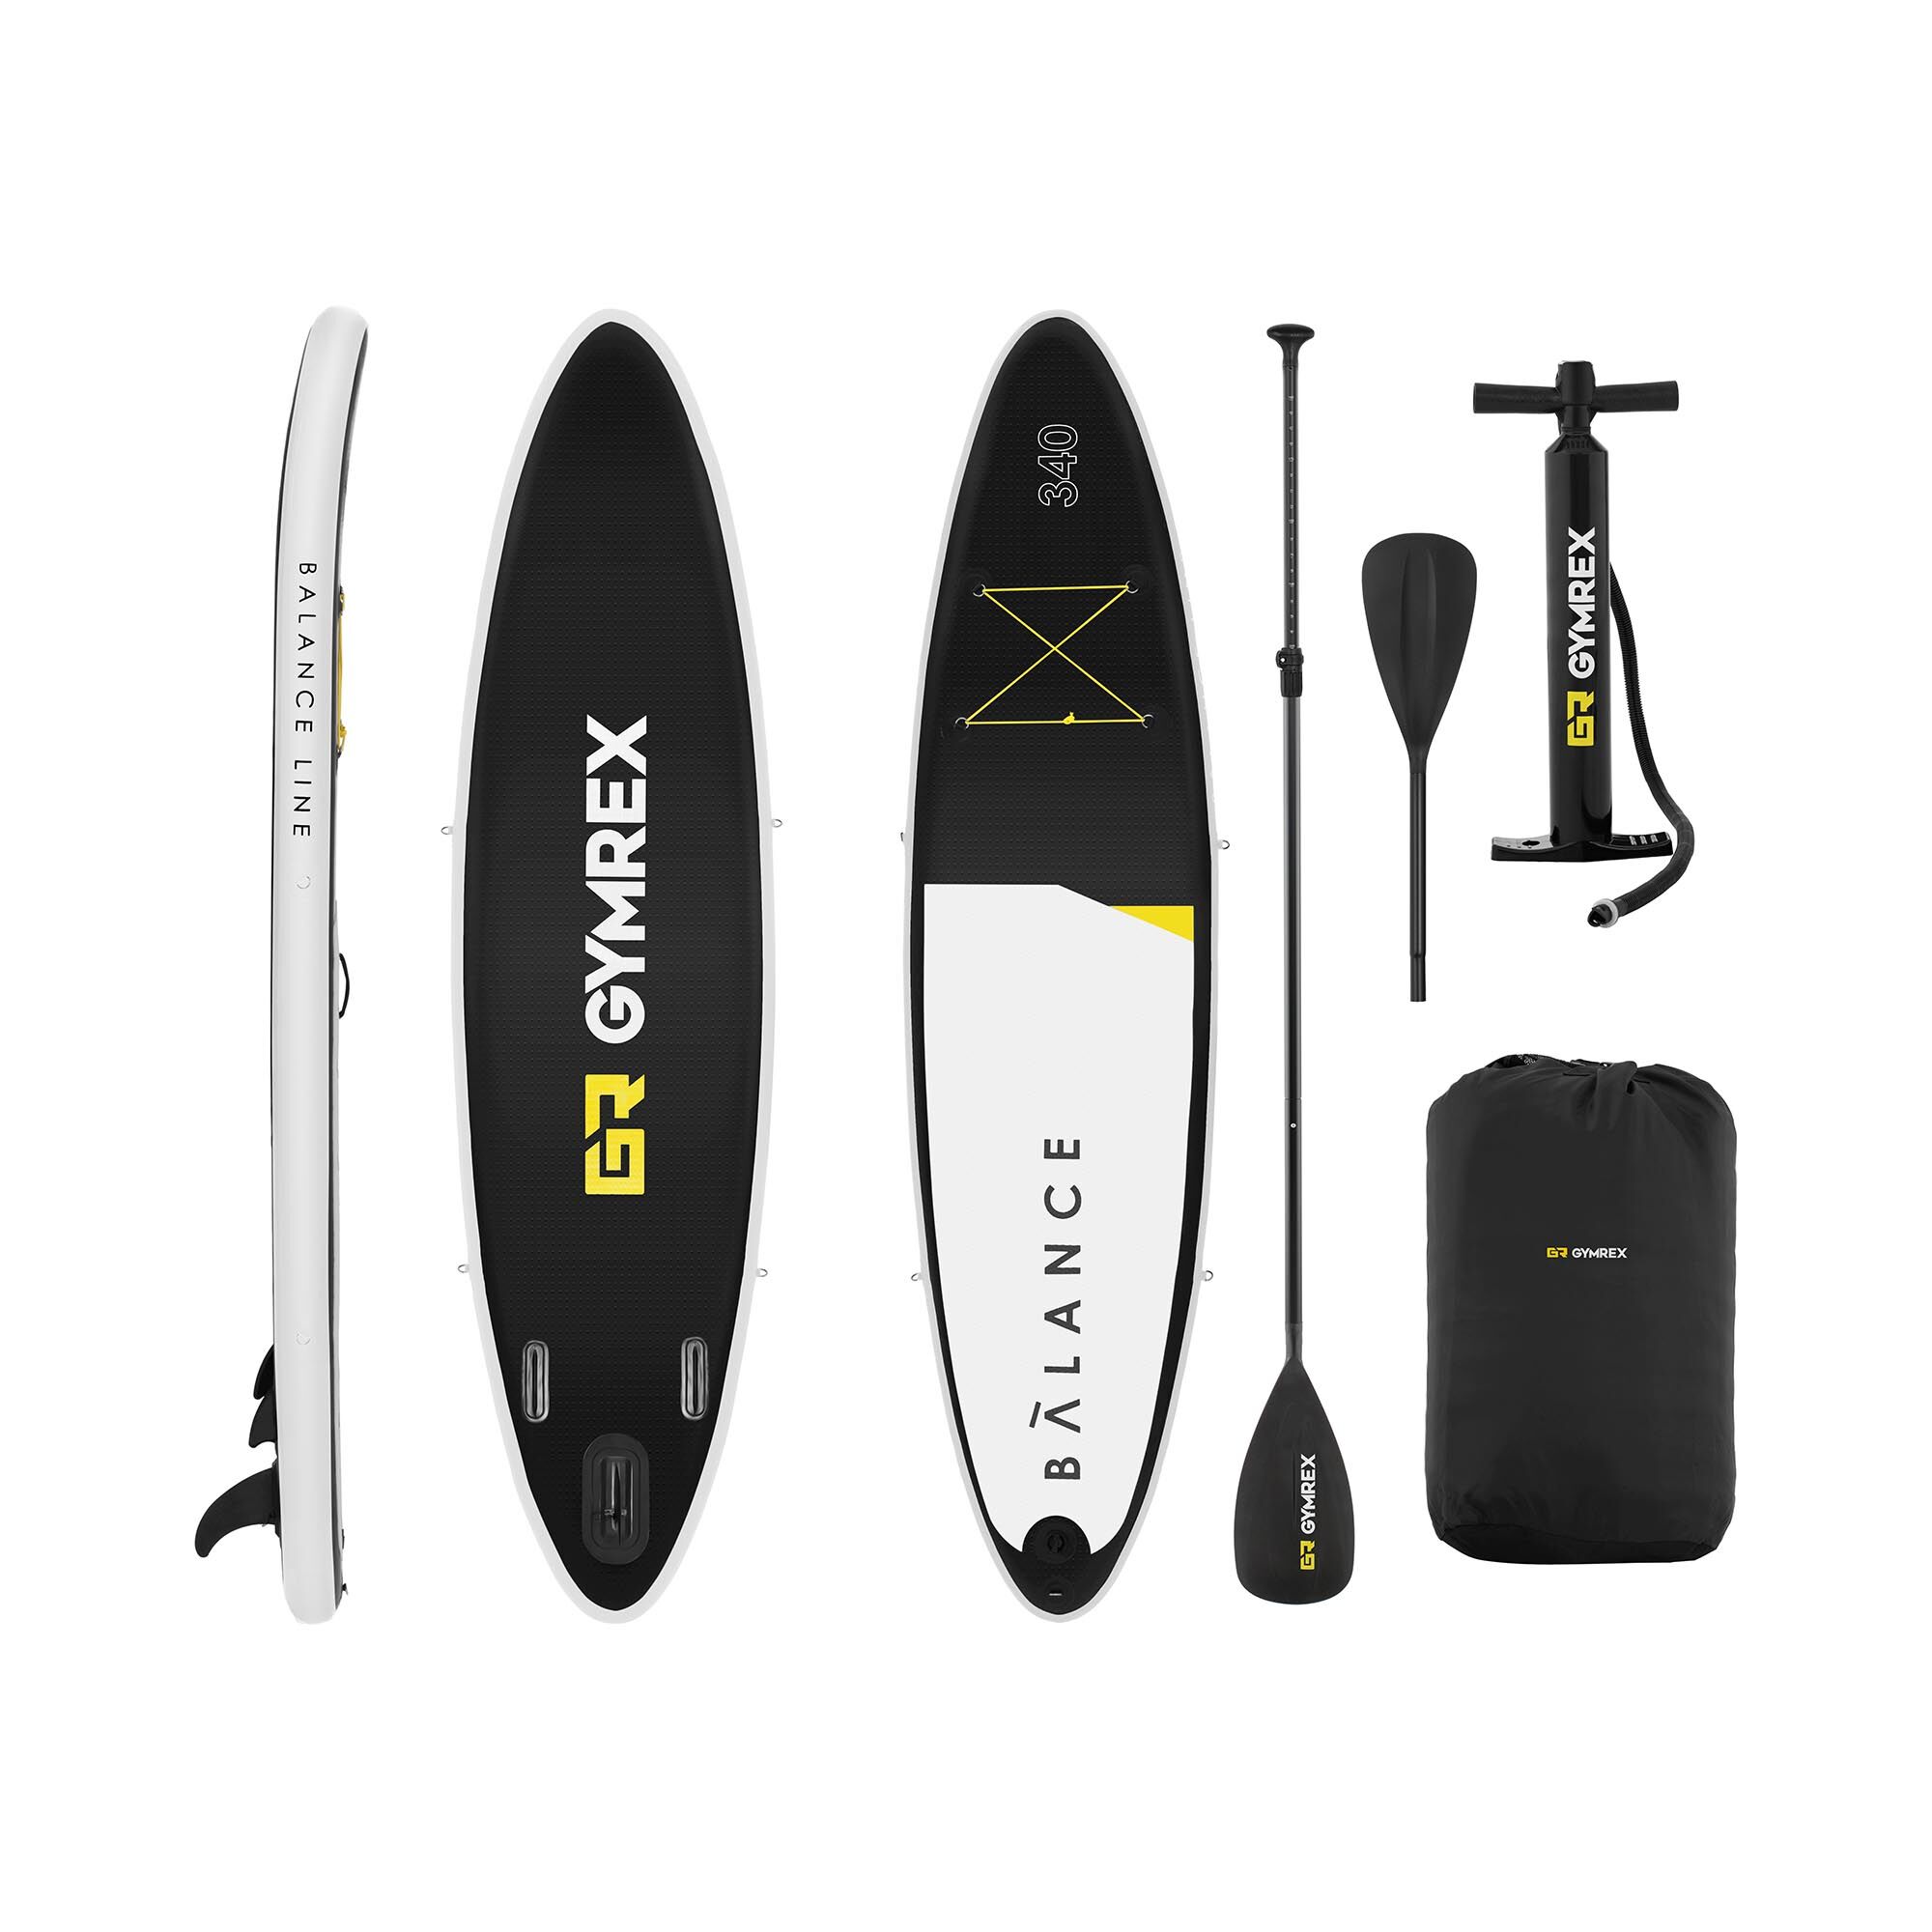 Gymrex Stand Up Paddle Board set - 145 kg - 335 x 79 x 15 cm GR-SPB340